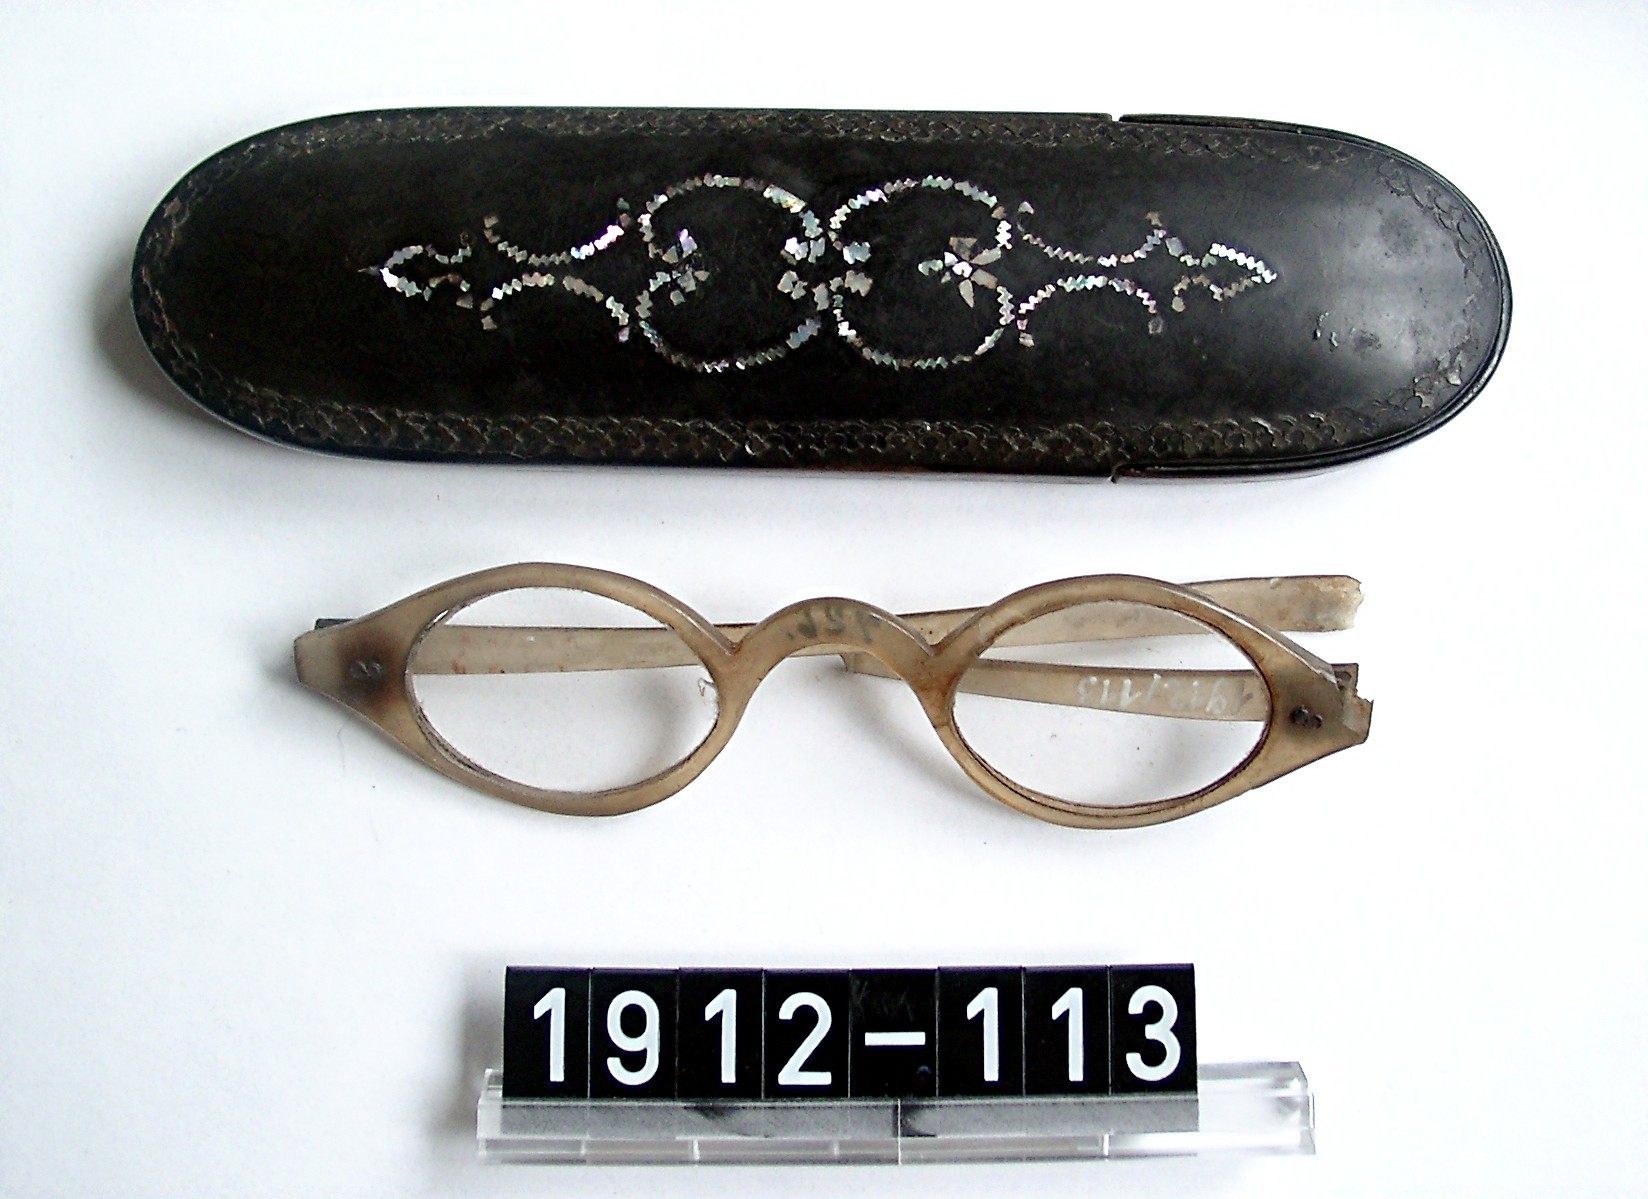 Brille mit Leder-Etui; Anfang 19.Jh. (Stadtmuseum Bad Dürkheim, Museumsgesellschaft Bad Dürkheim e.V. CC BY-NC-SA)